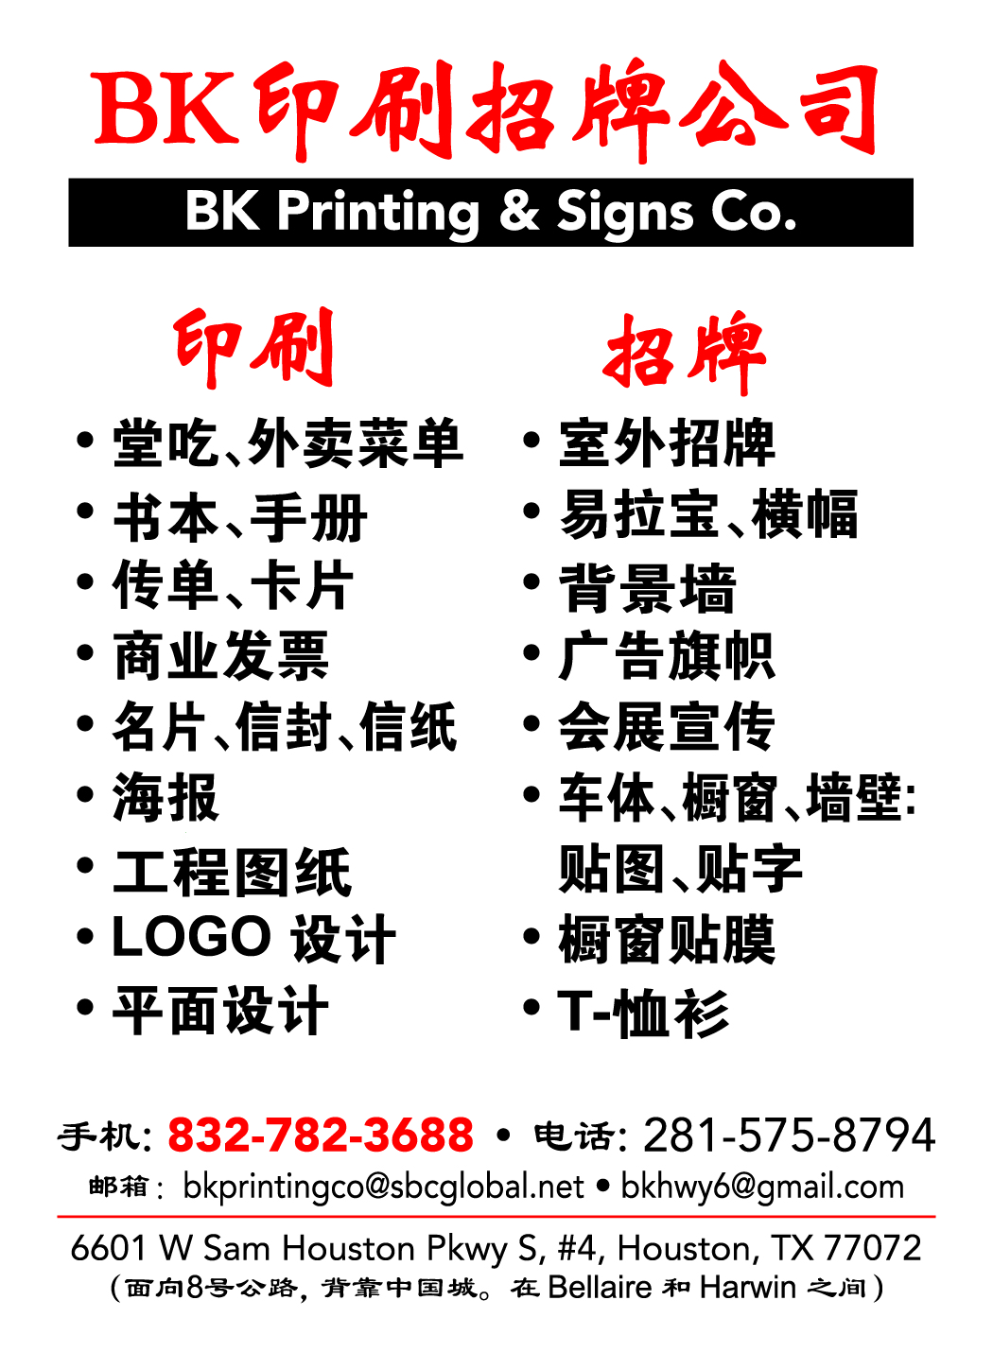 BK Printing & Signs 新東方印刷